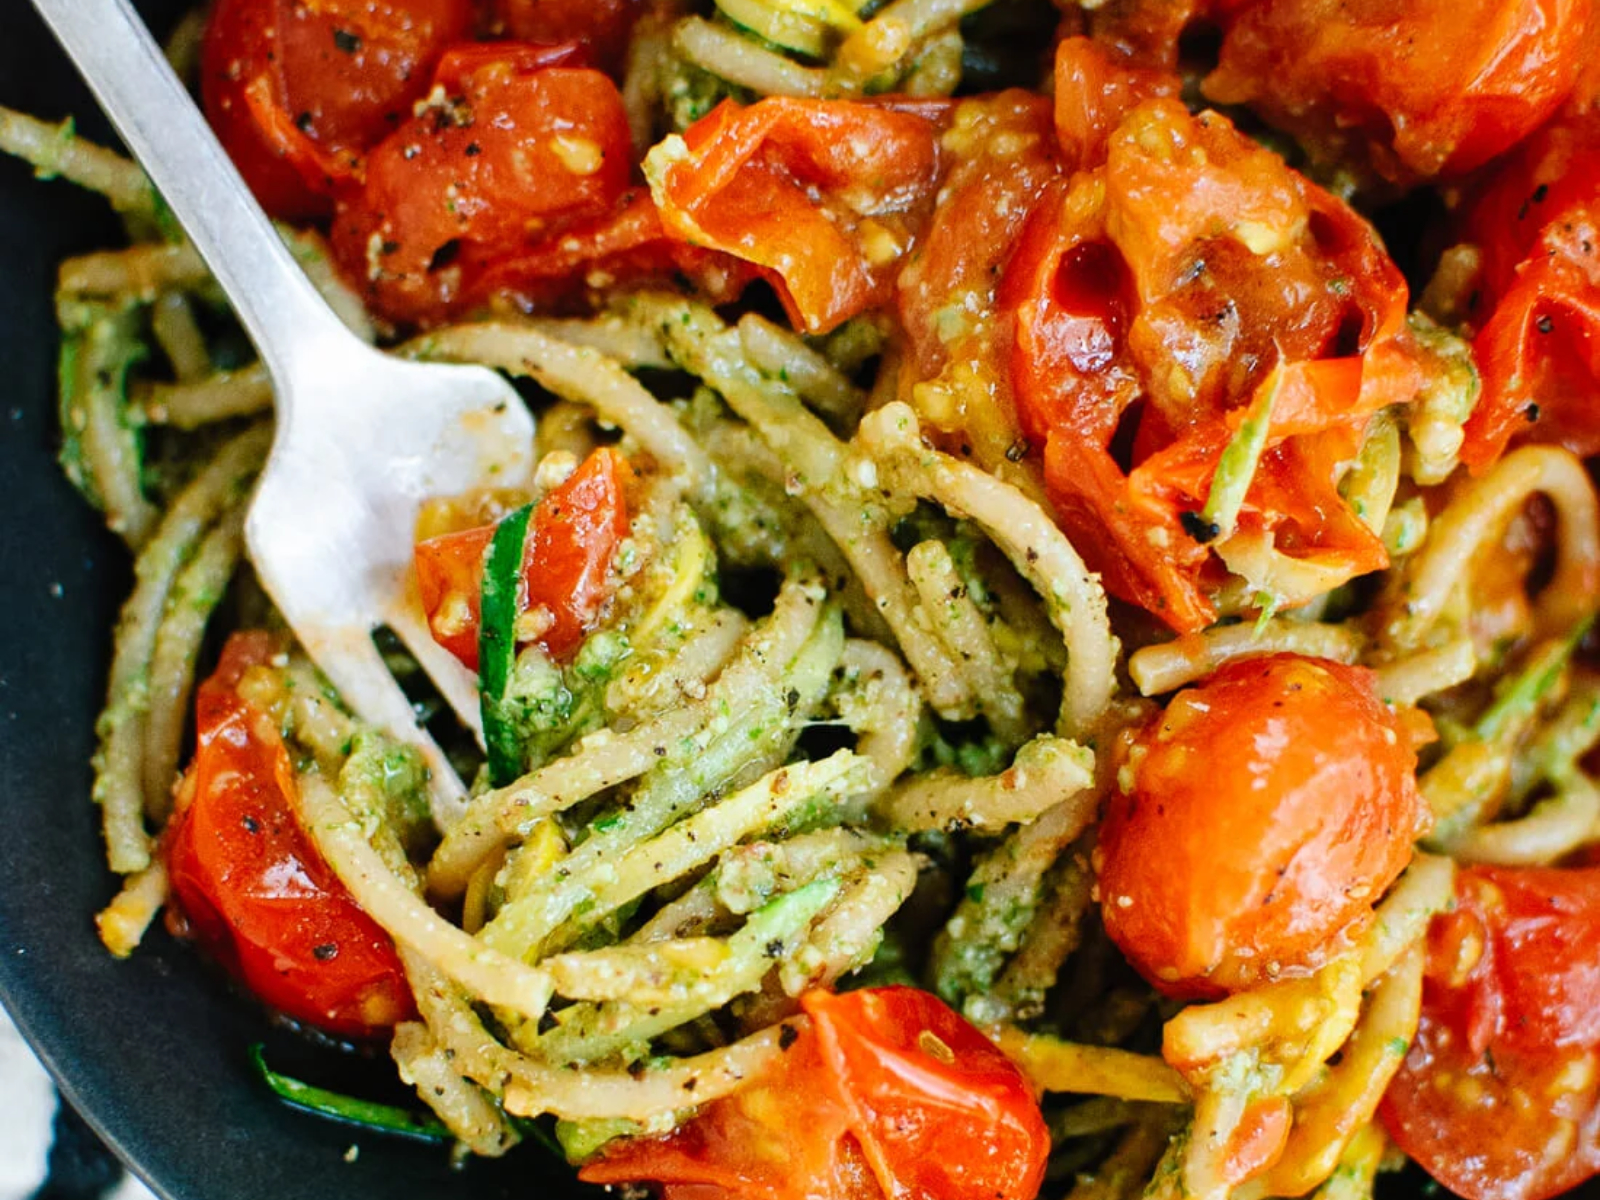 Pesto Squash Noodles and Spaghetti with Burst Cherry Tomatoes